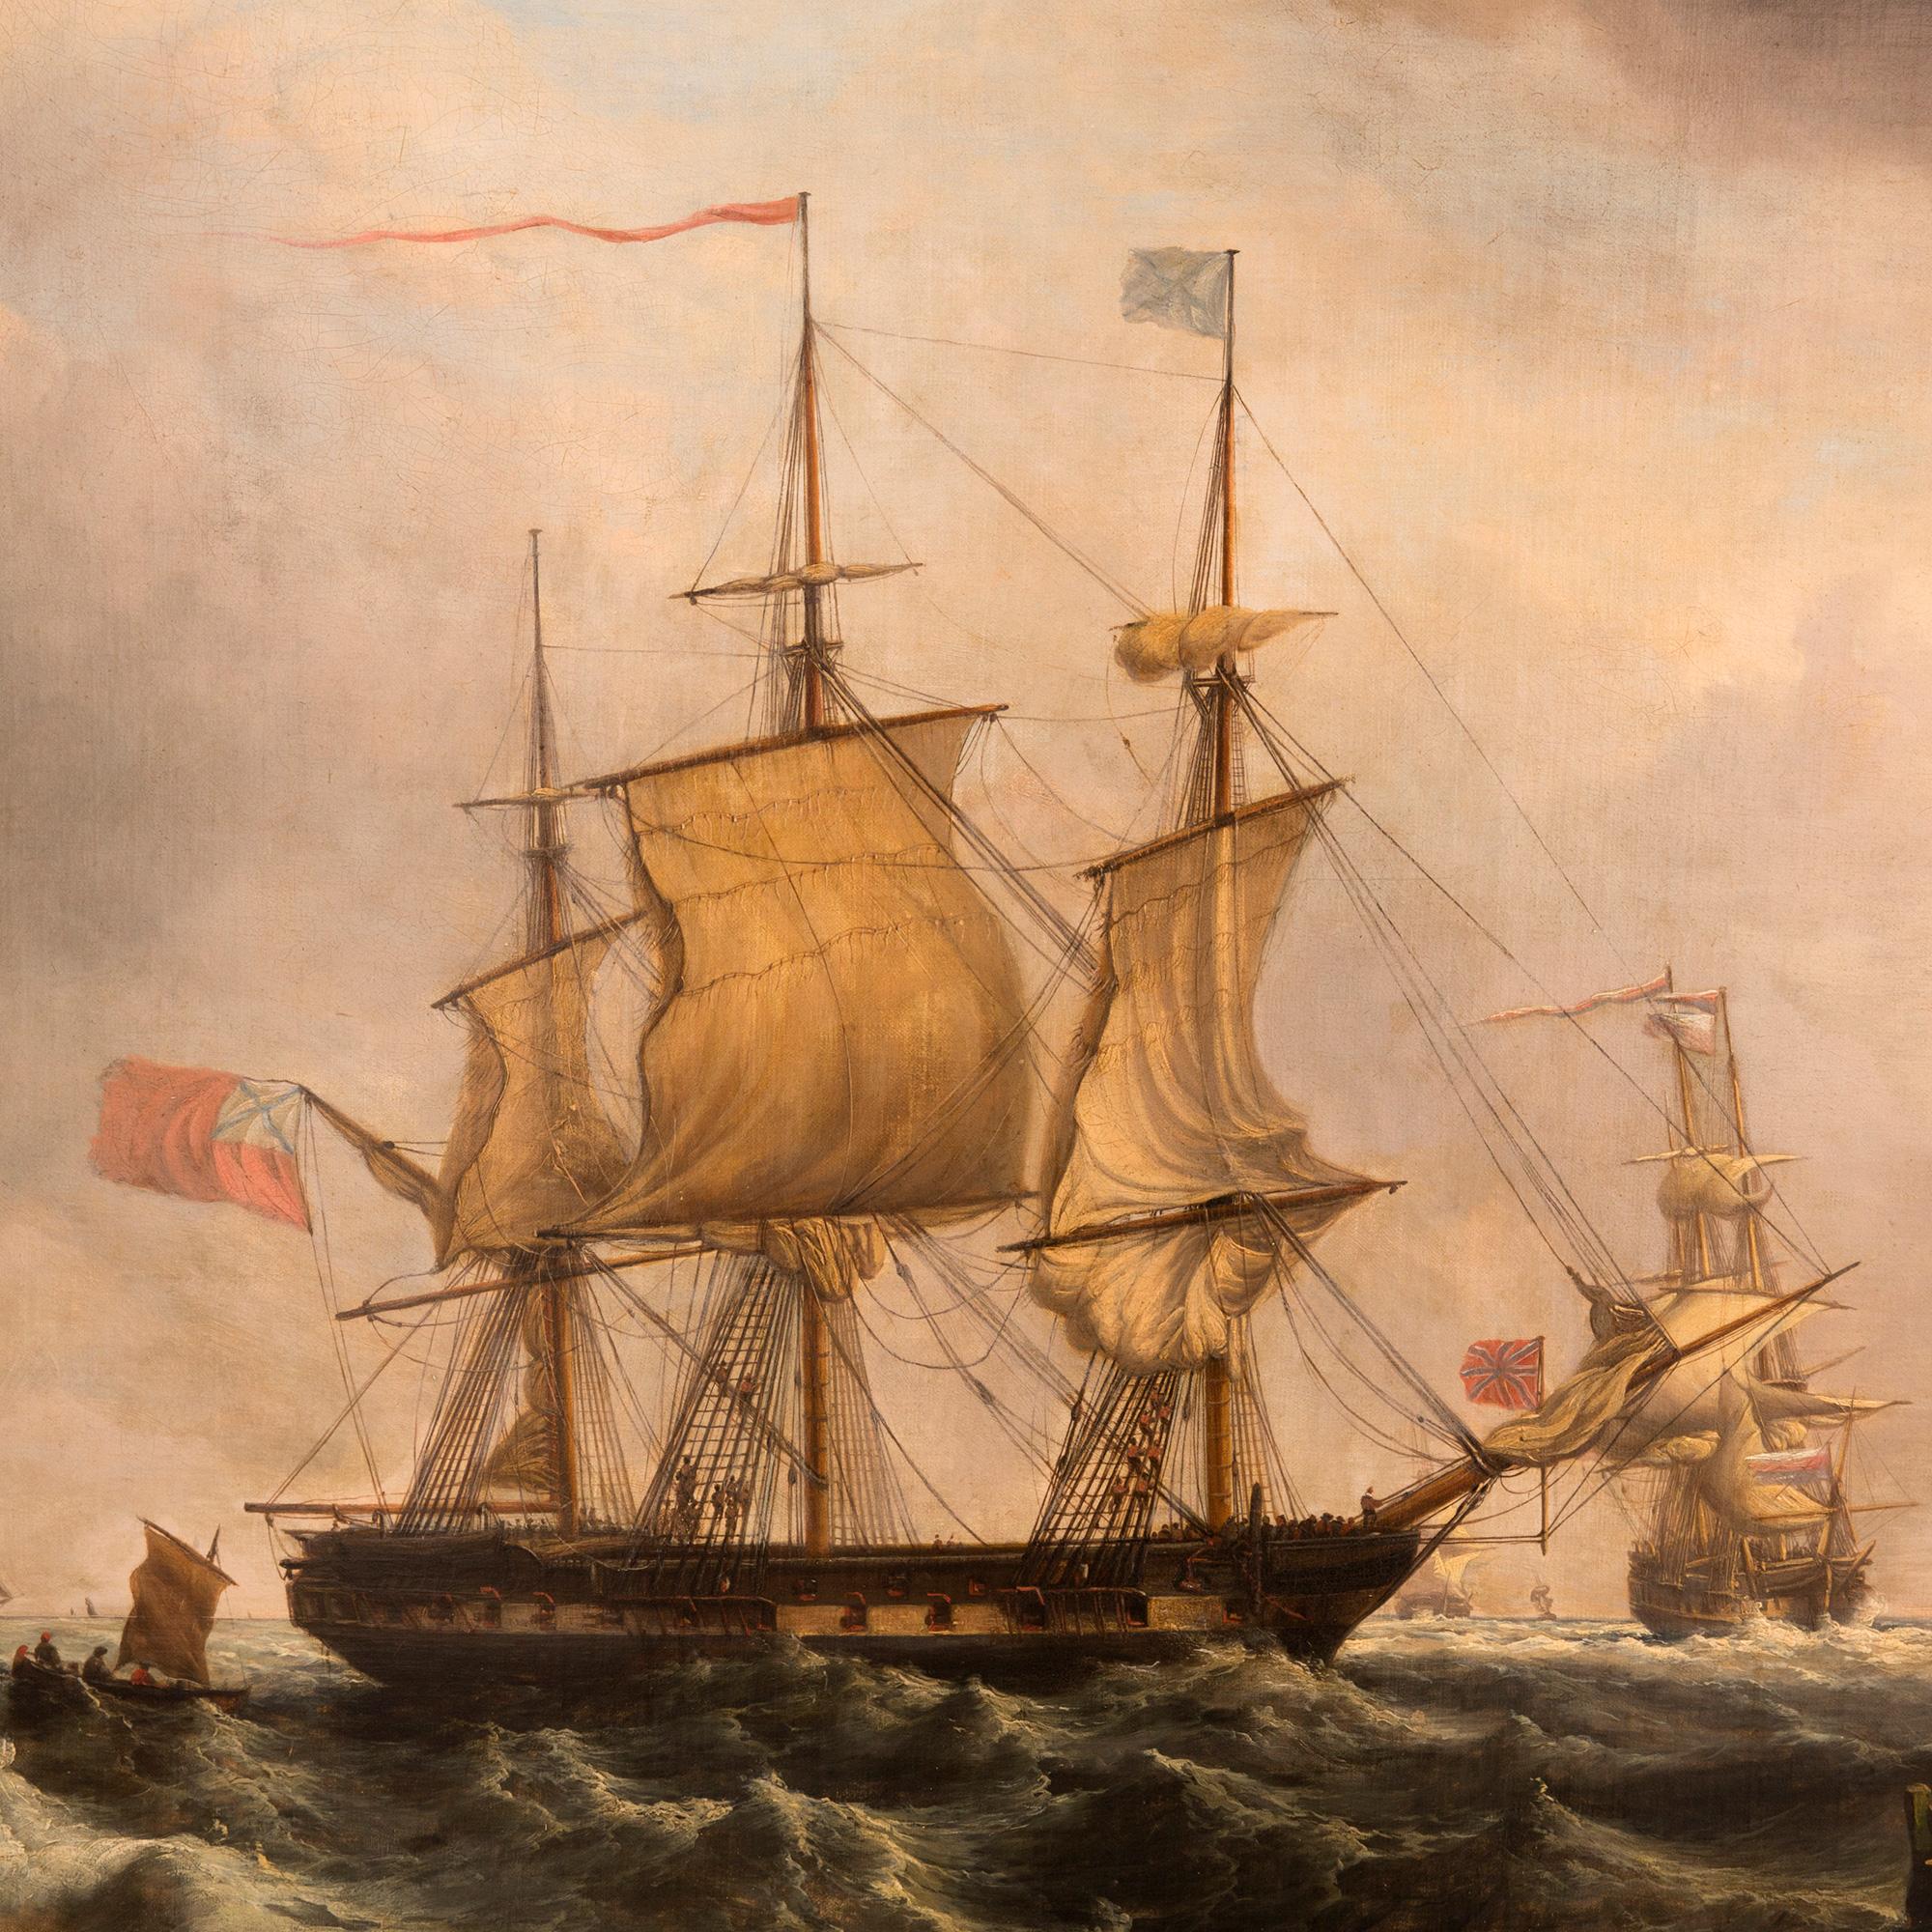 painting depicting maritime scenes